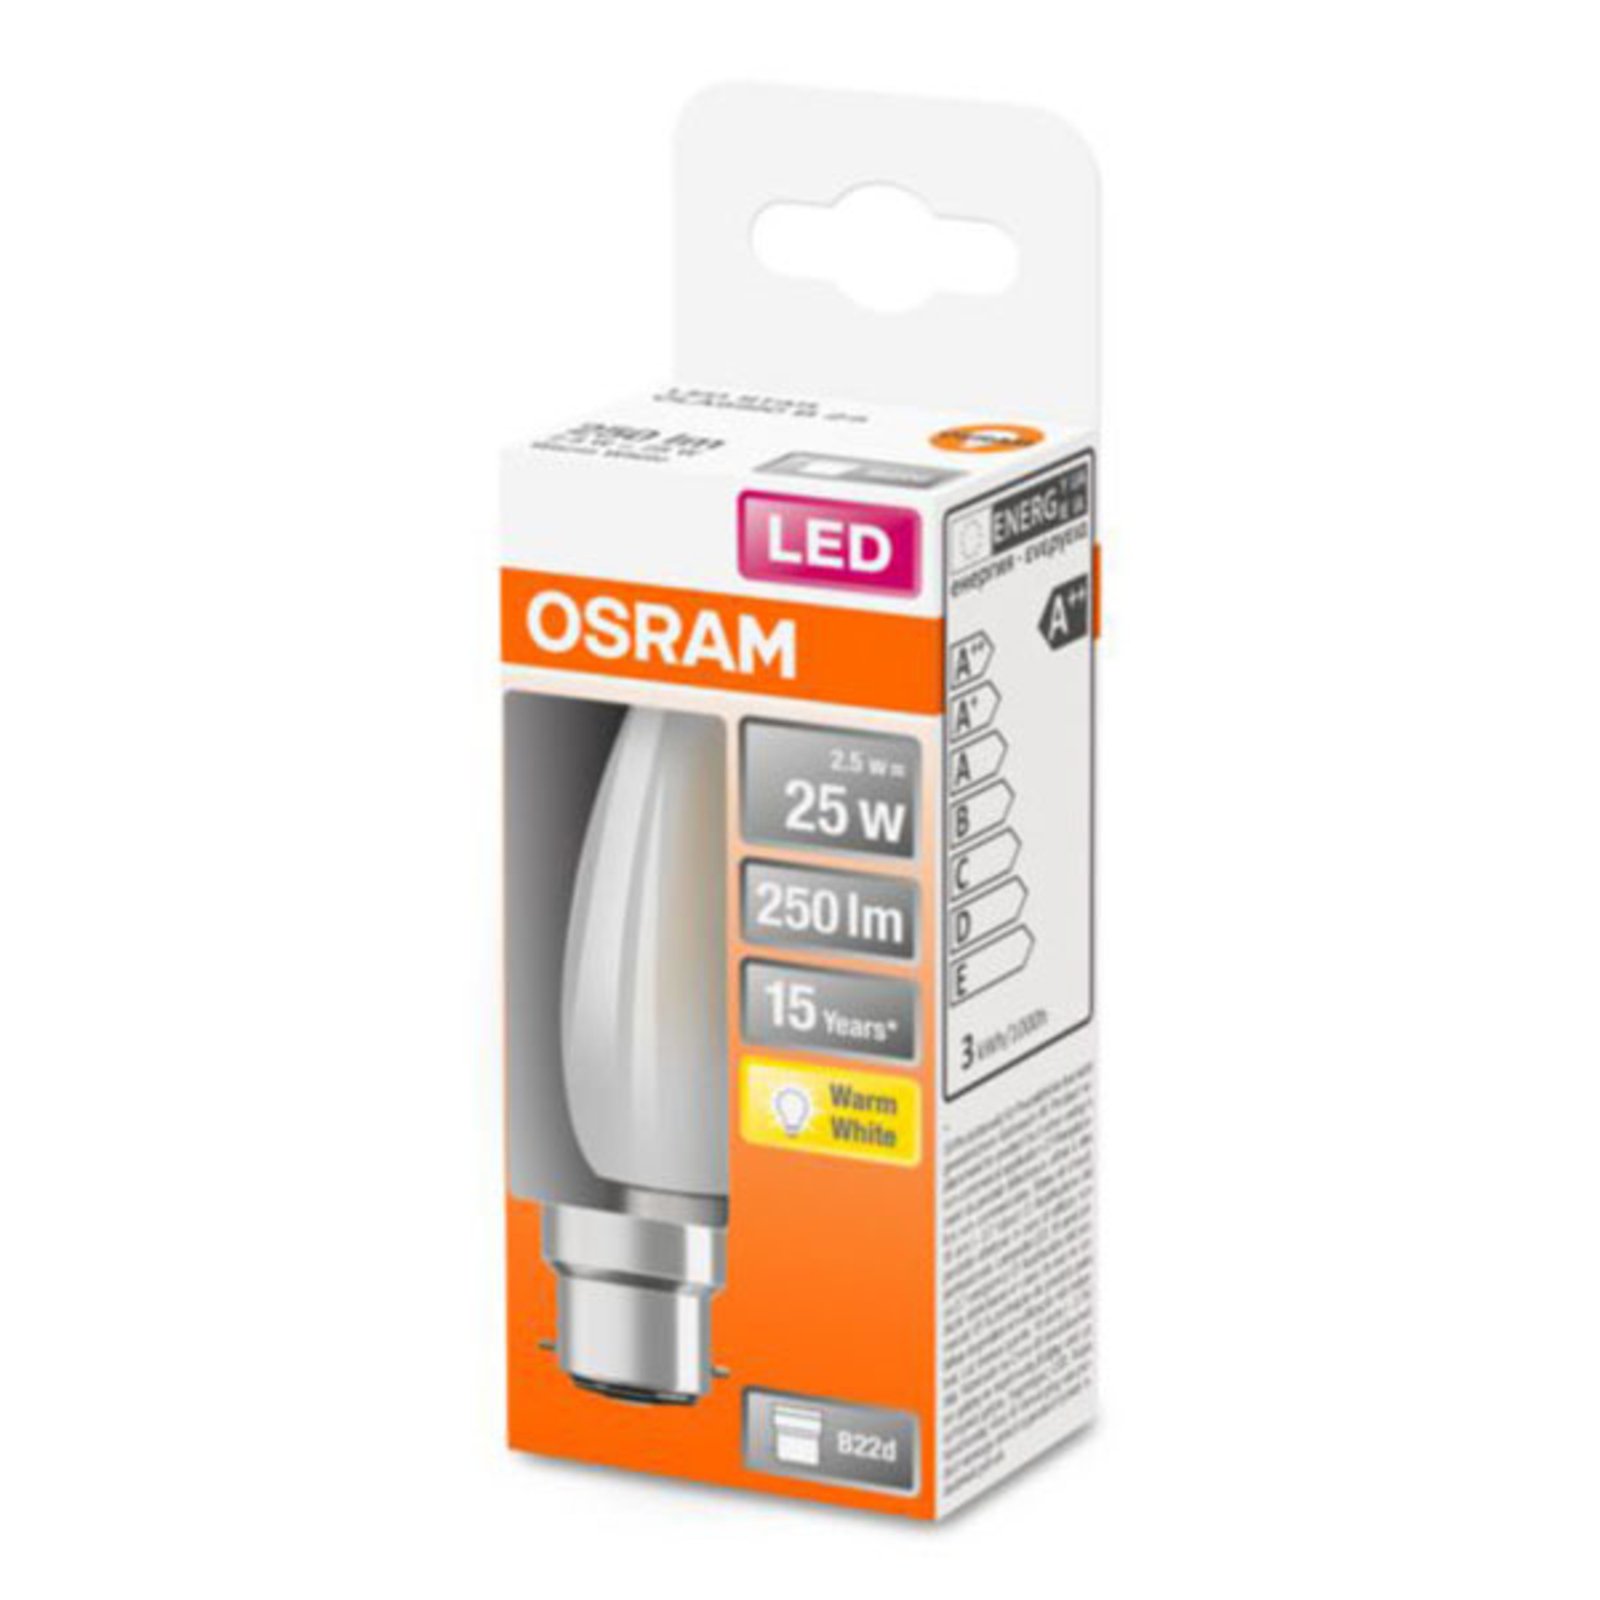 OSRAM LED stearinlyslampe B22d 2,5 W 2 700 K matt